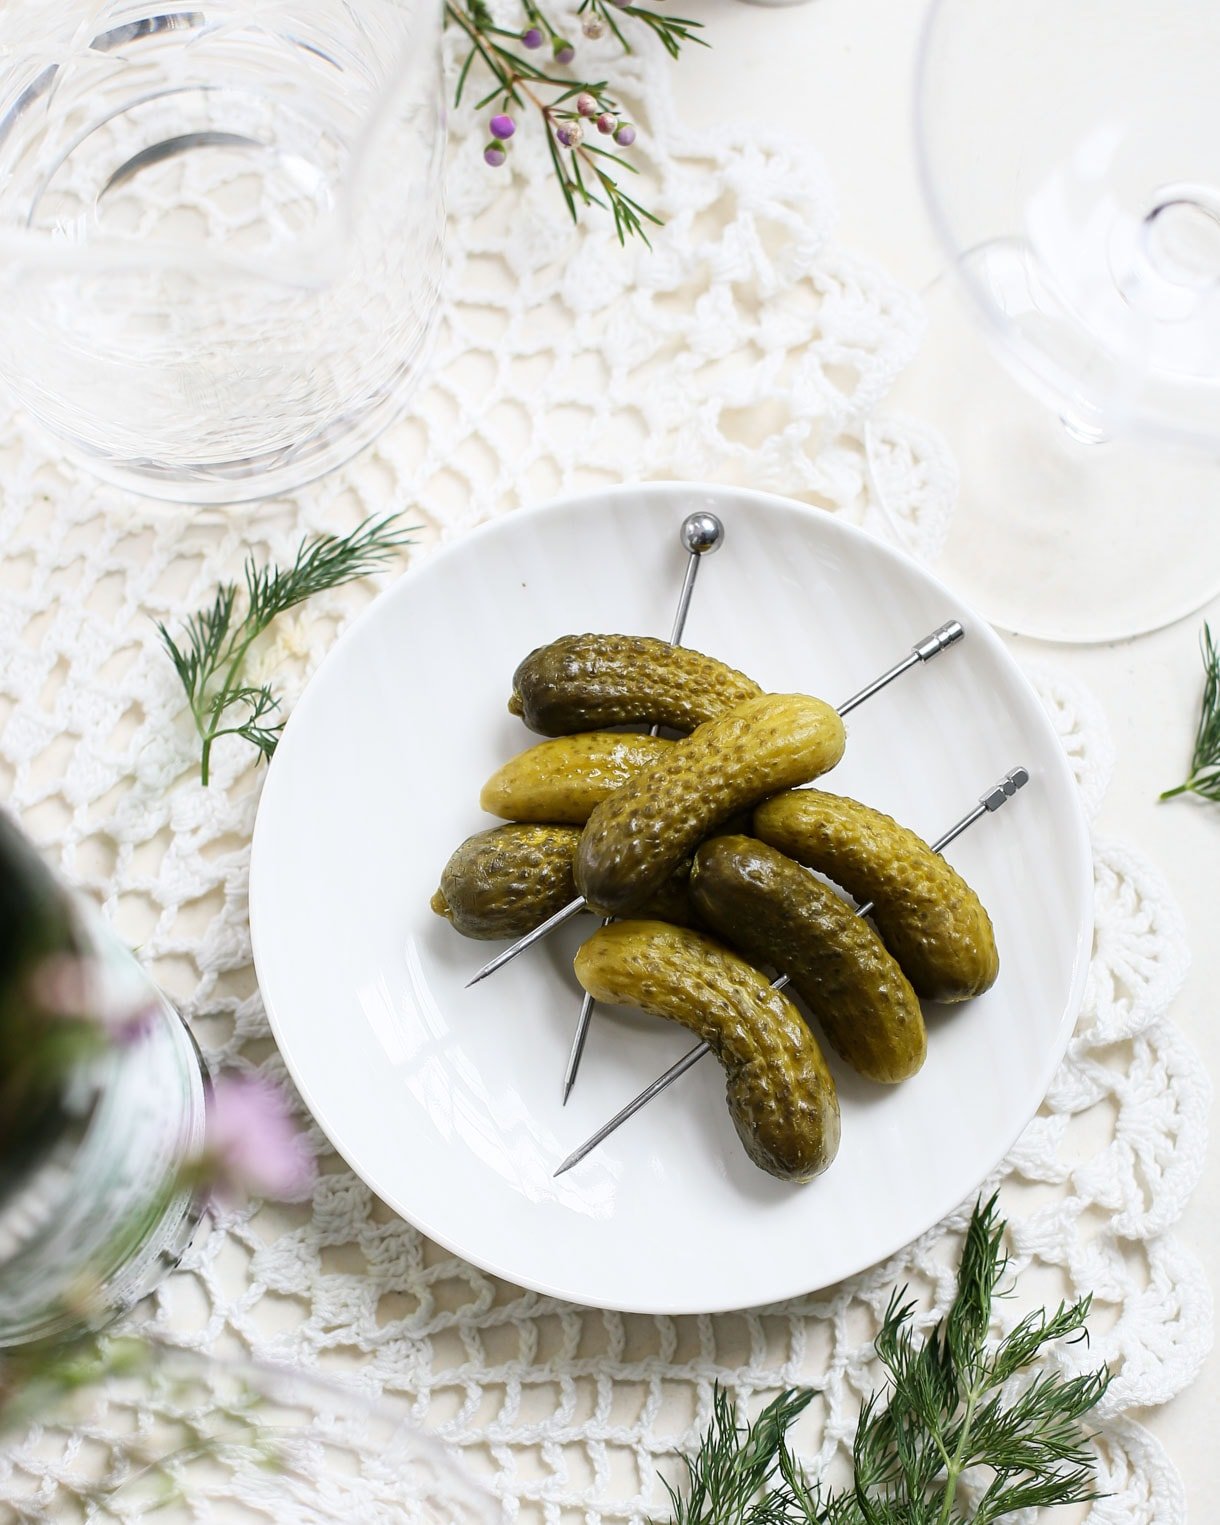 cornichon pickles on a white plate